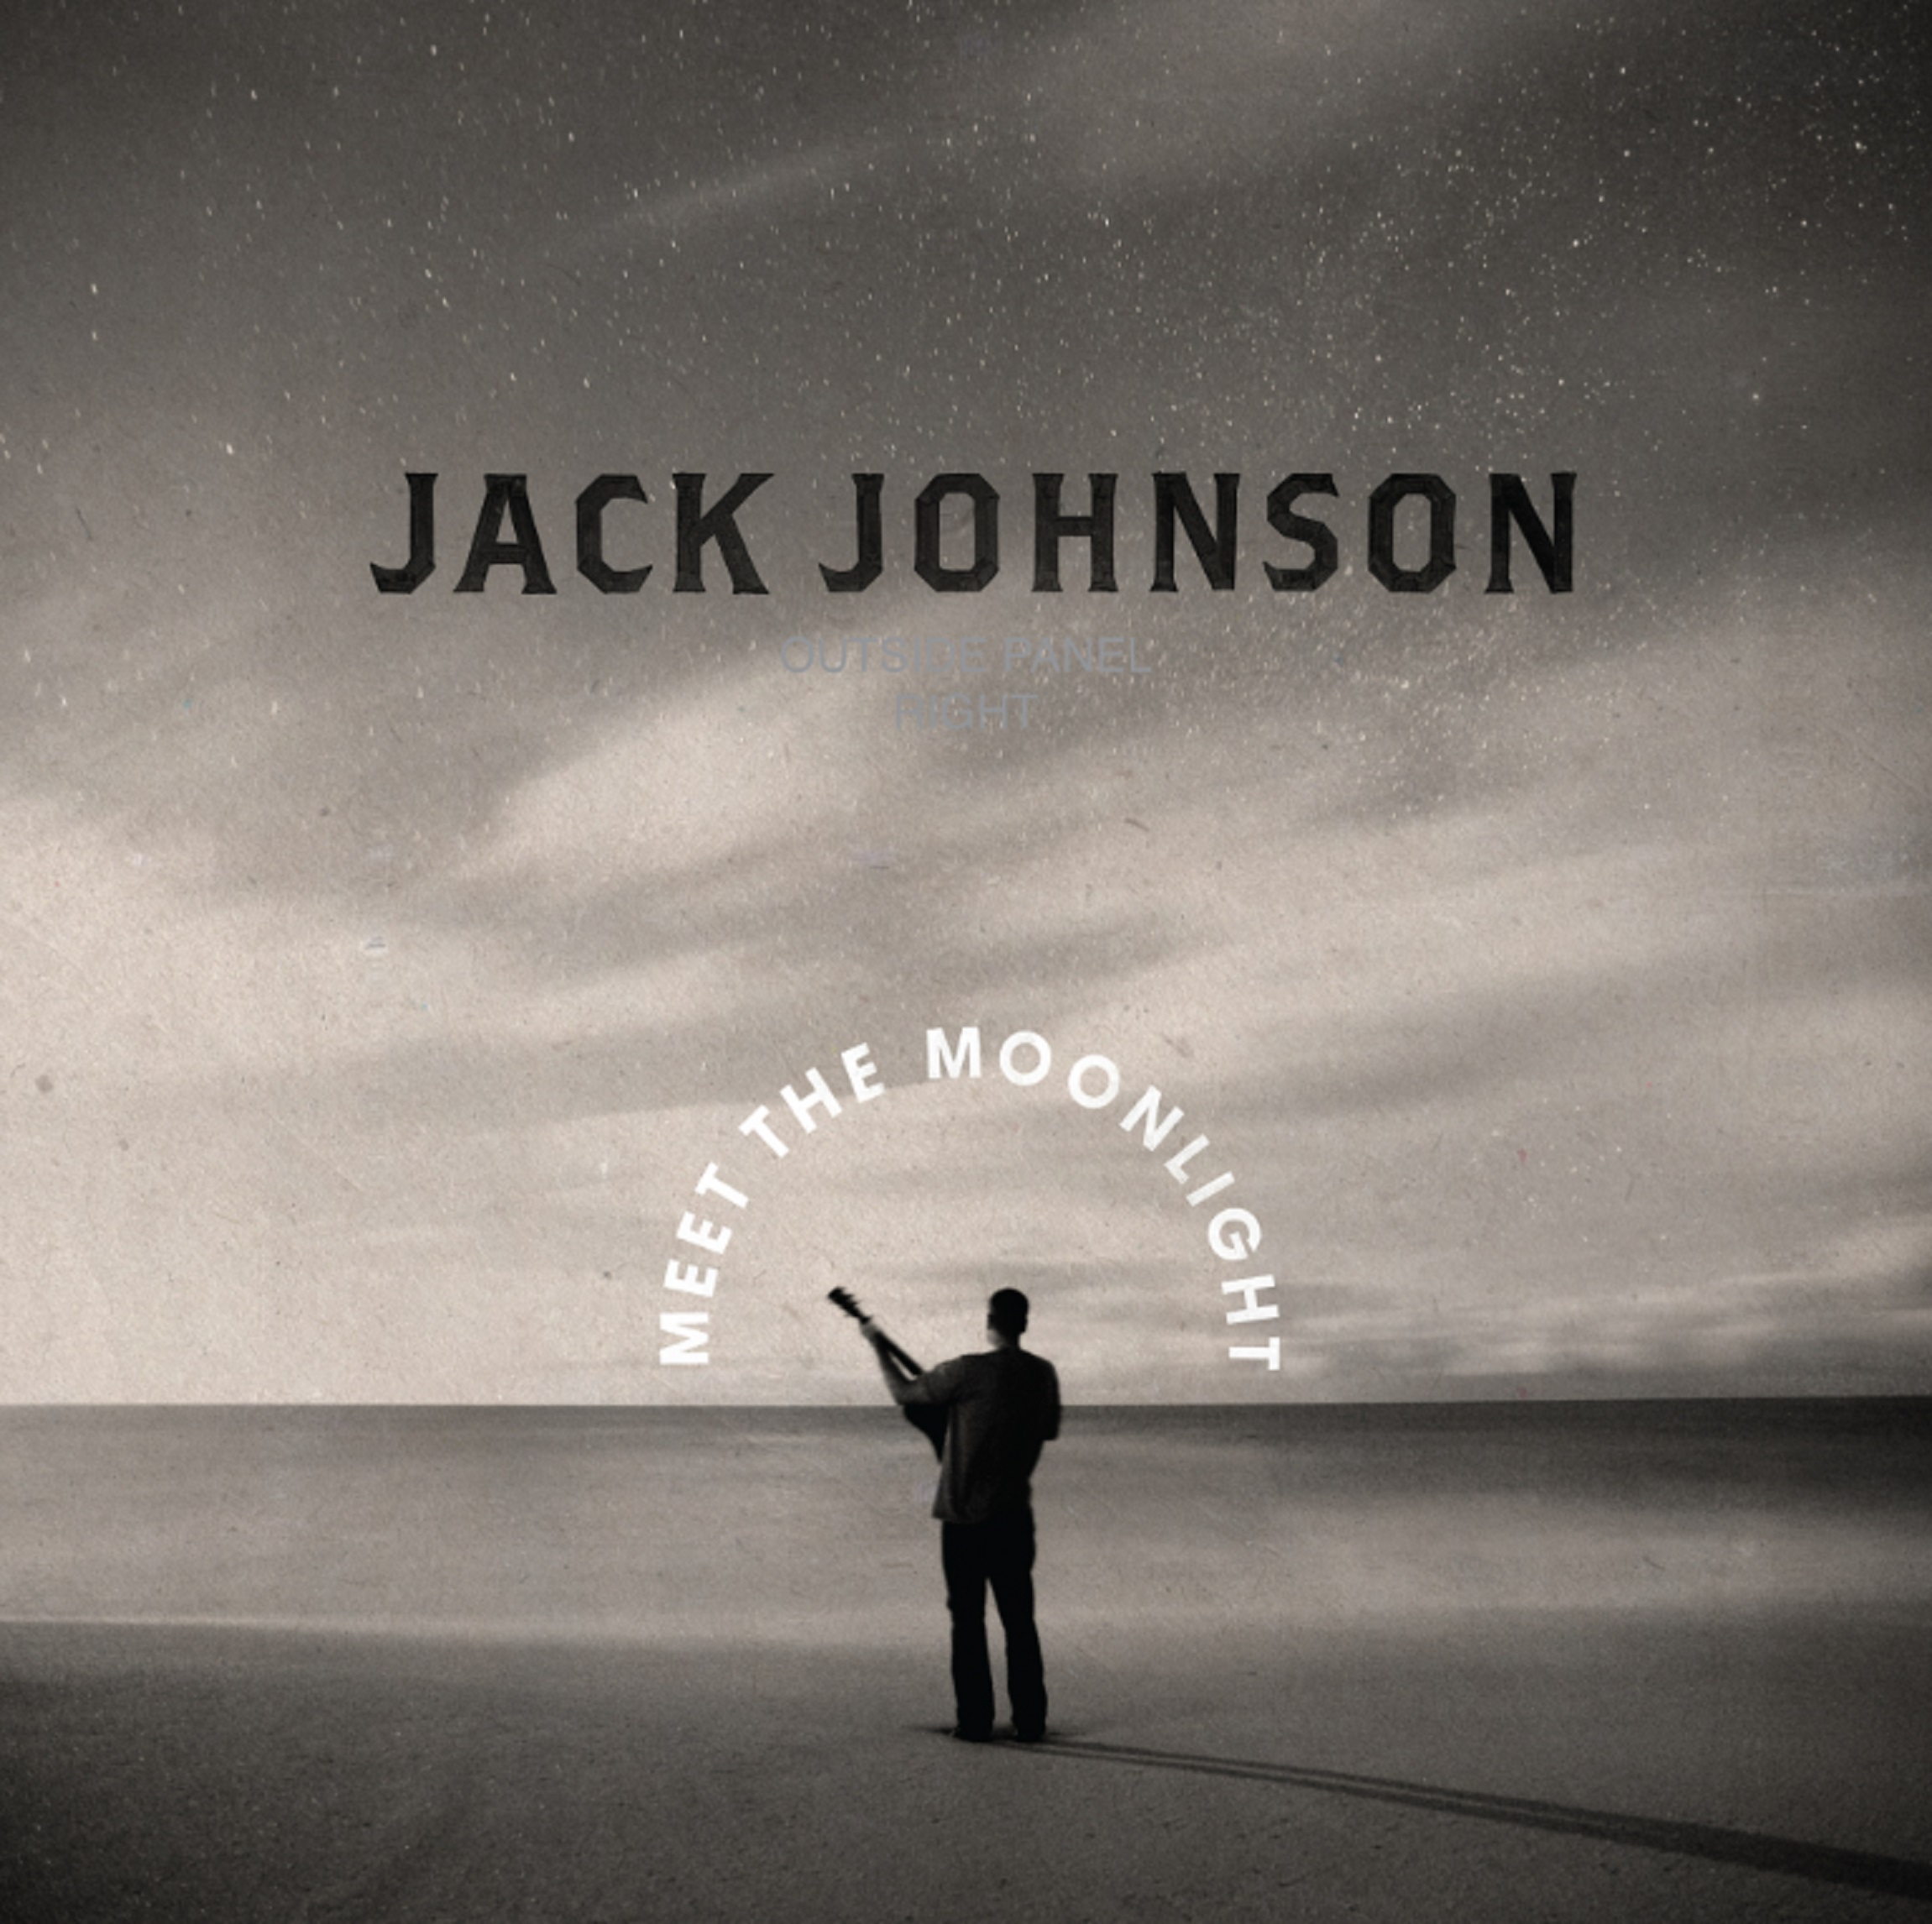 JACK JOHNSON ANNOUNCES NEW ALBUM MEET THE MOONLIGHT OUT JUNE 24th